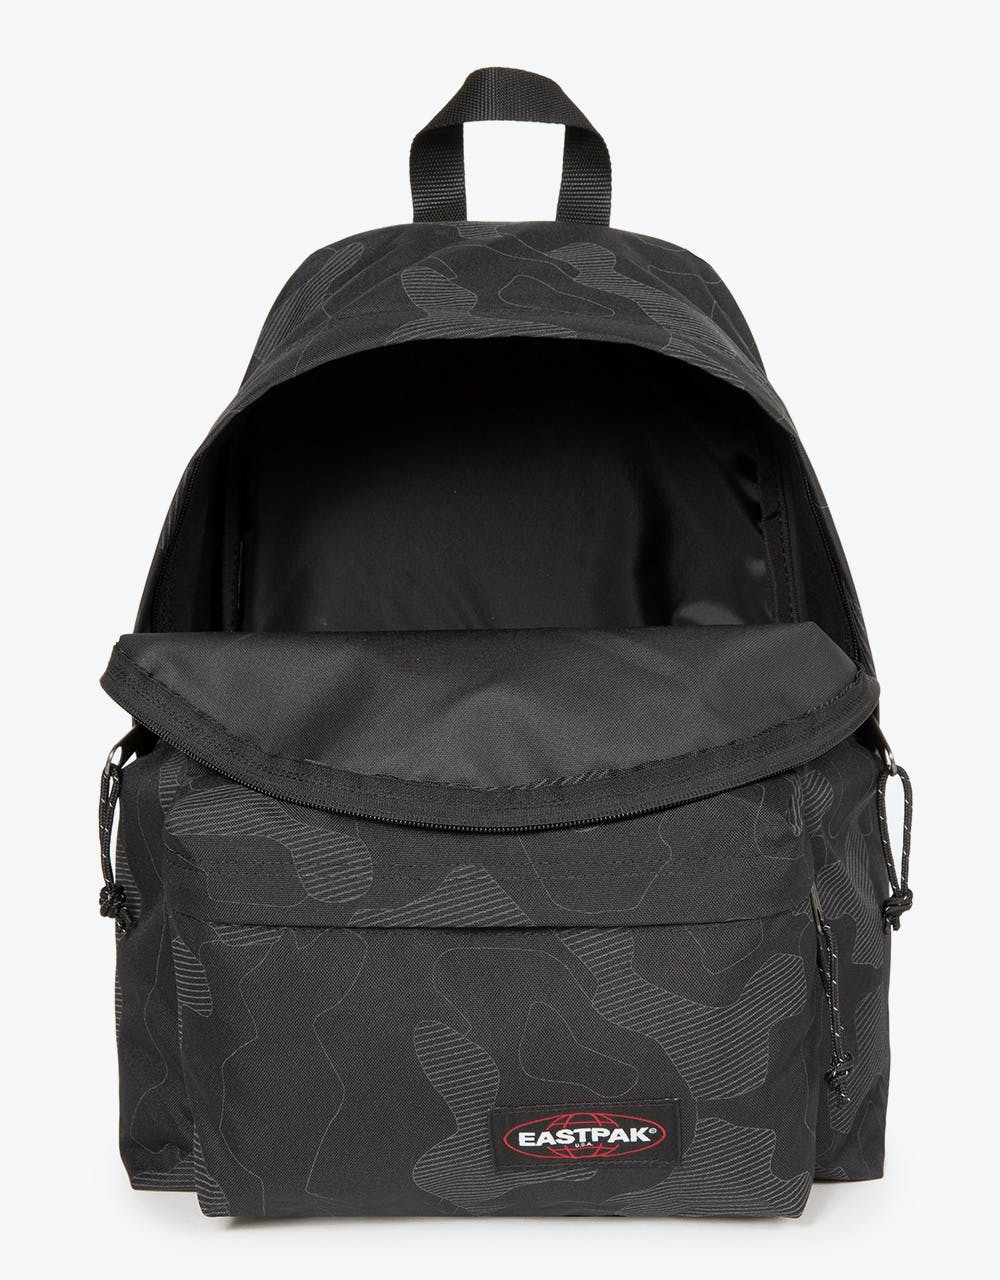 Eastpak Padded Pak'R Backpack - Reflective Camo Black